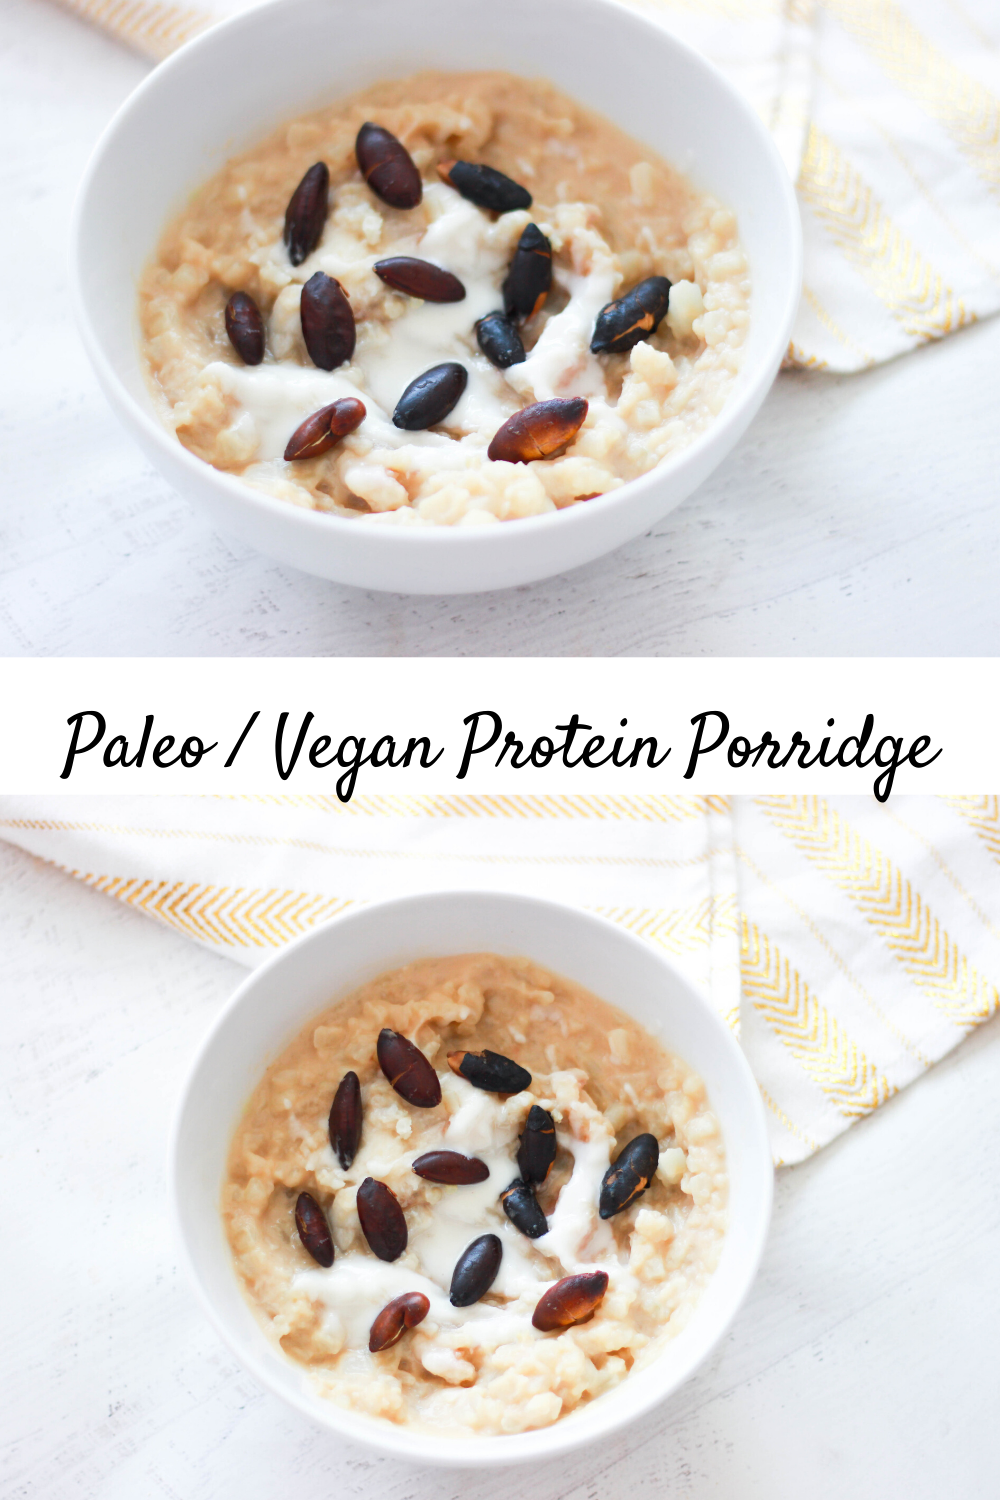 Paleo / Vegan Protein Porridge